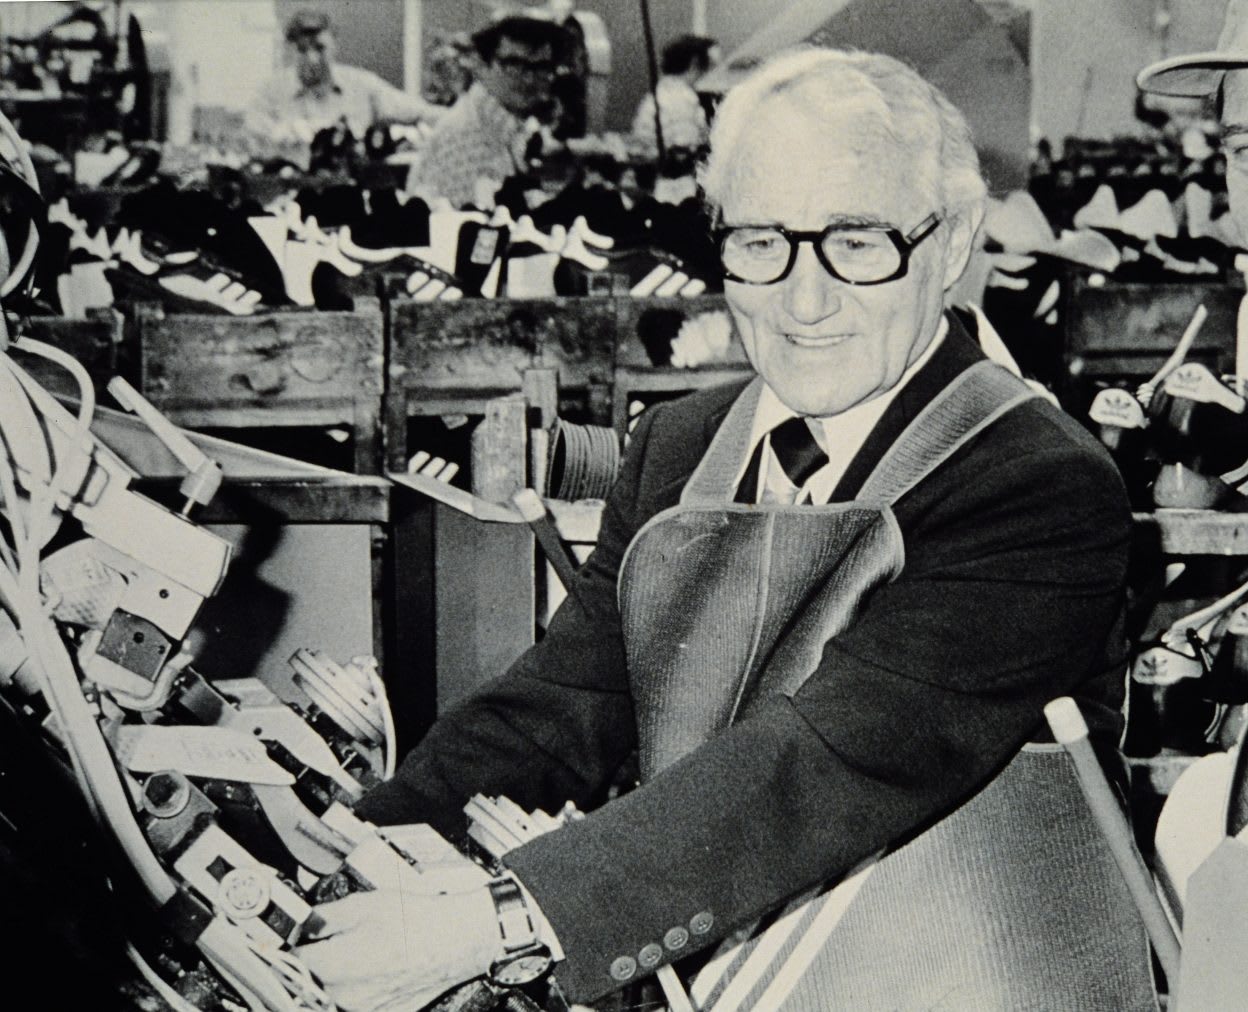 Adolf Dassler: The Creative and Innovative Leader Behind adidas